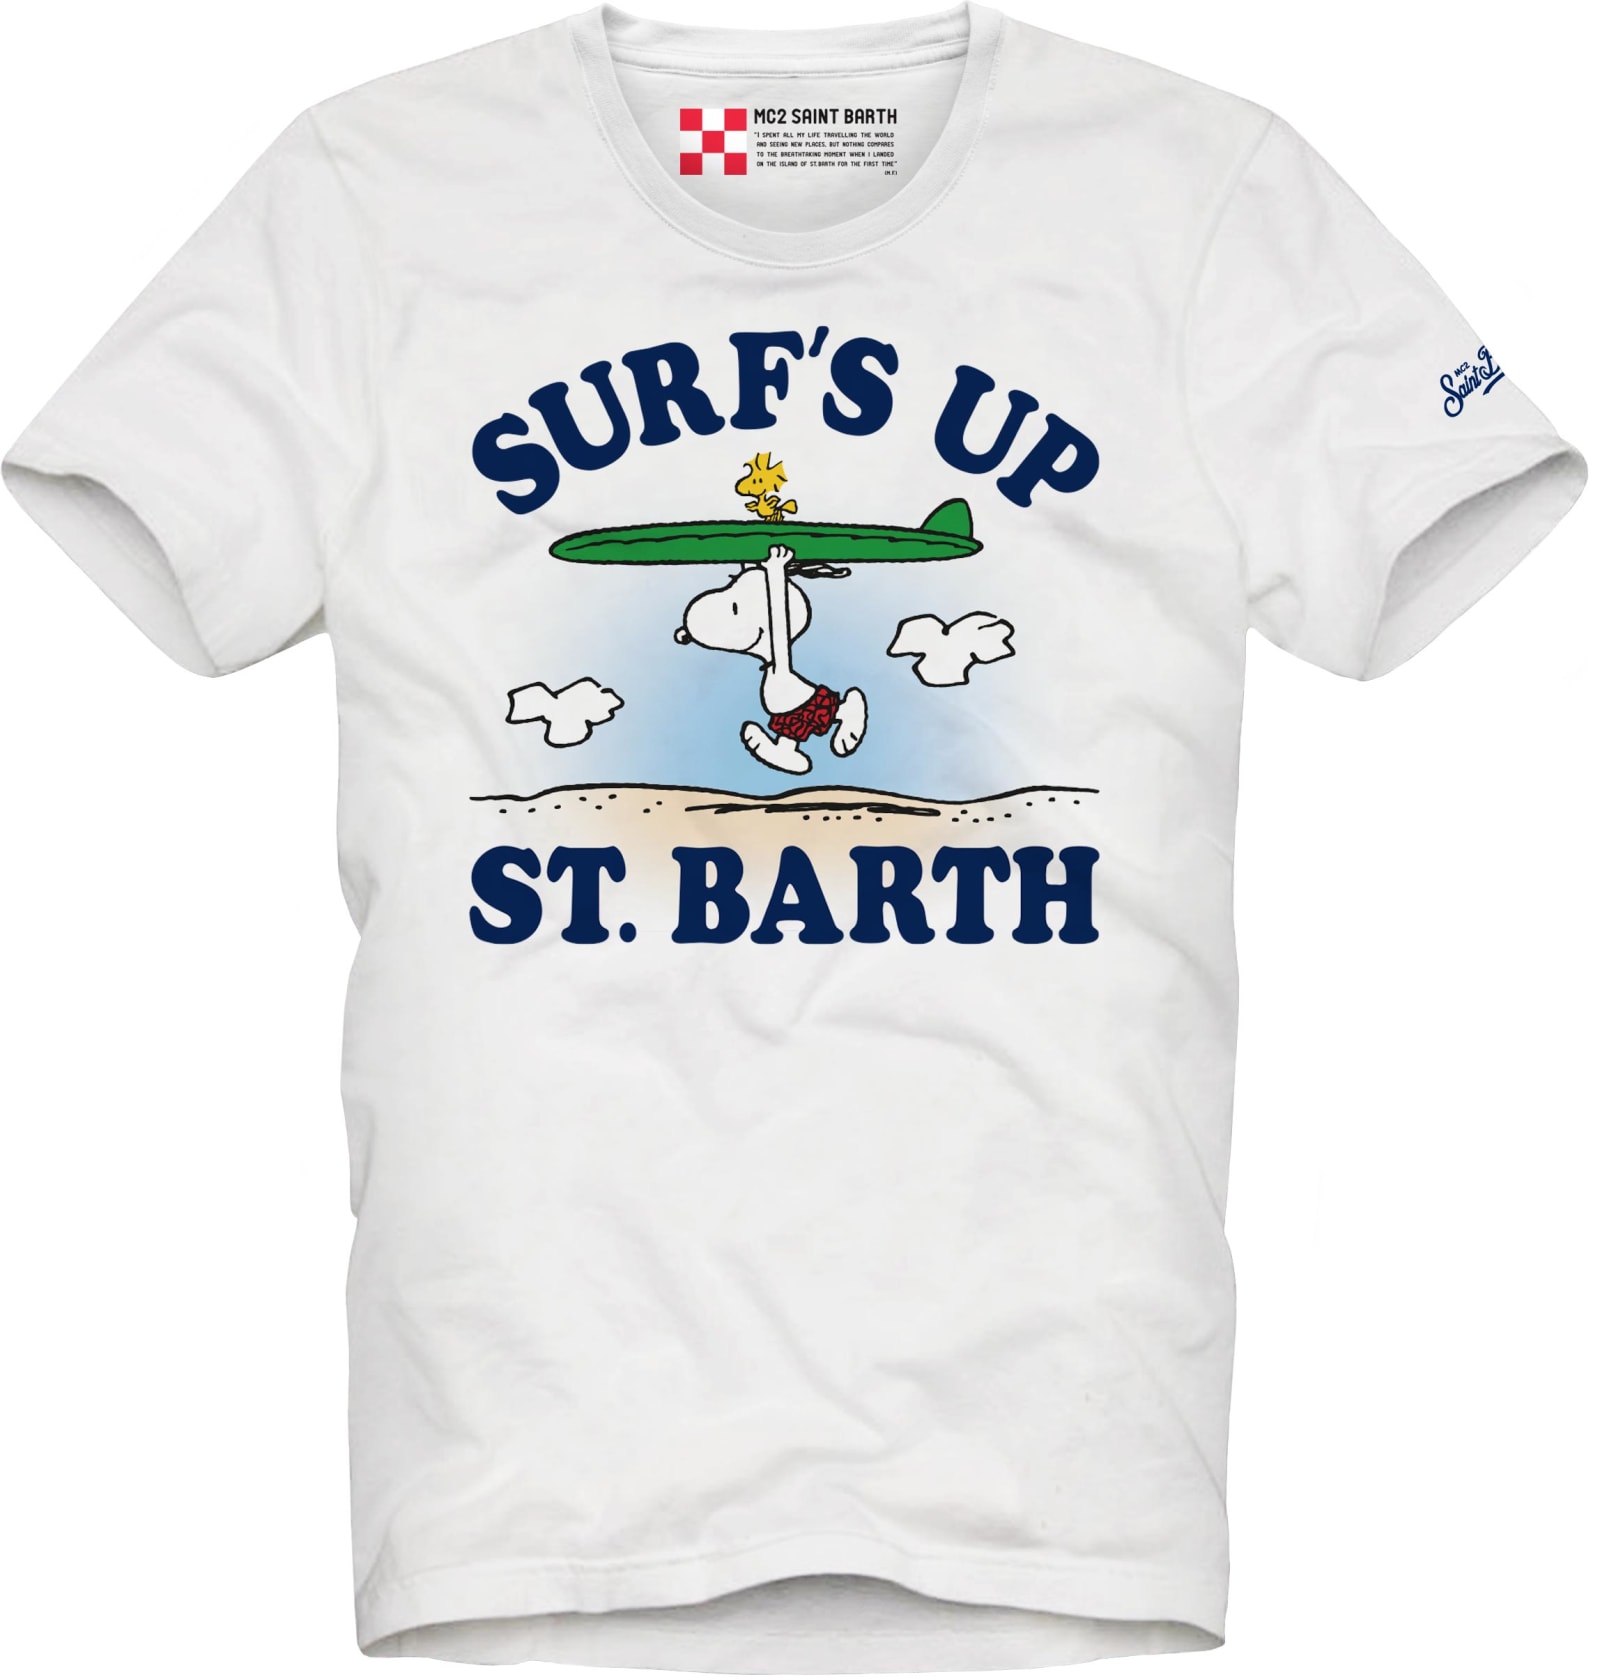 MC2 Saint Barth Snoopy Surfs Up T-shirt Boy